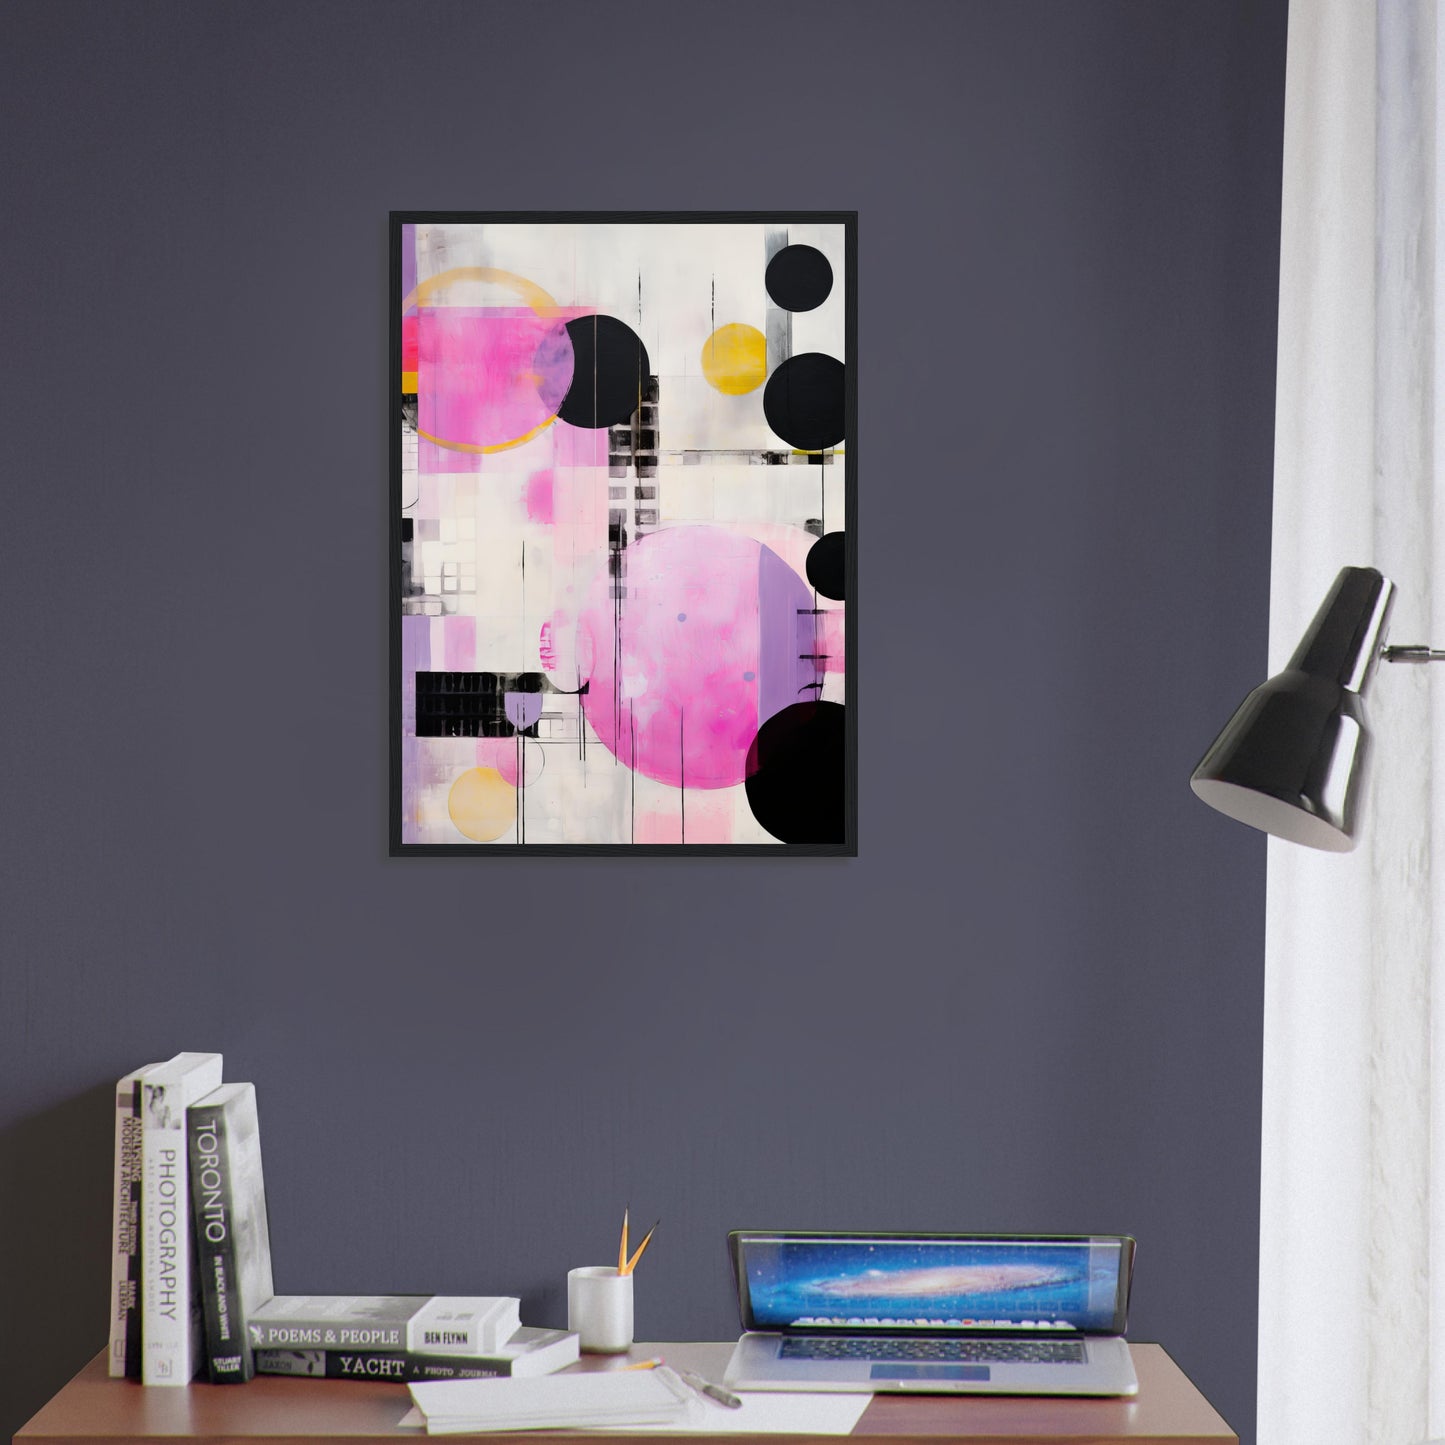 Construct Me - Modern Pink Abstract Wall Art Print